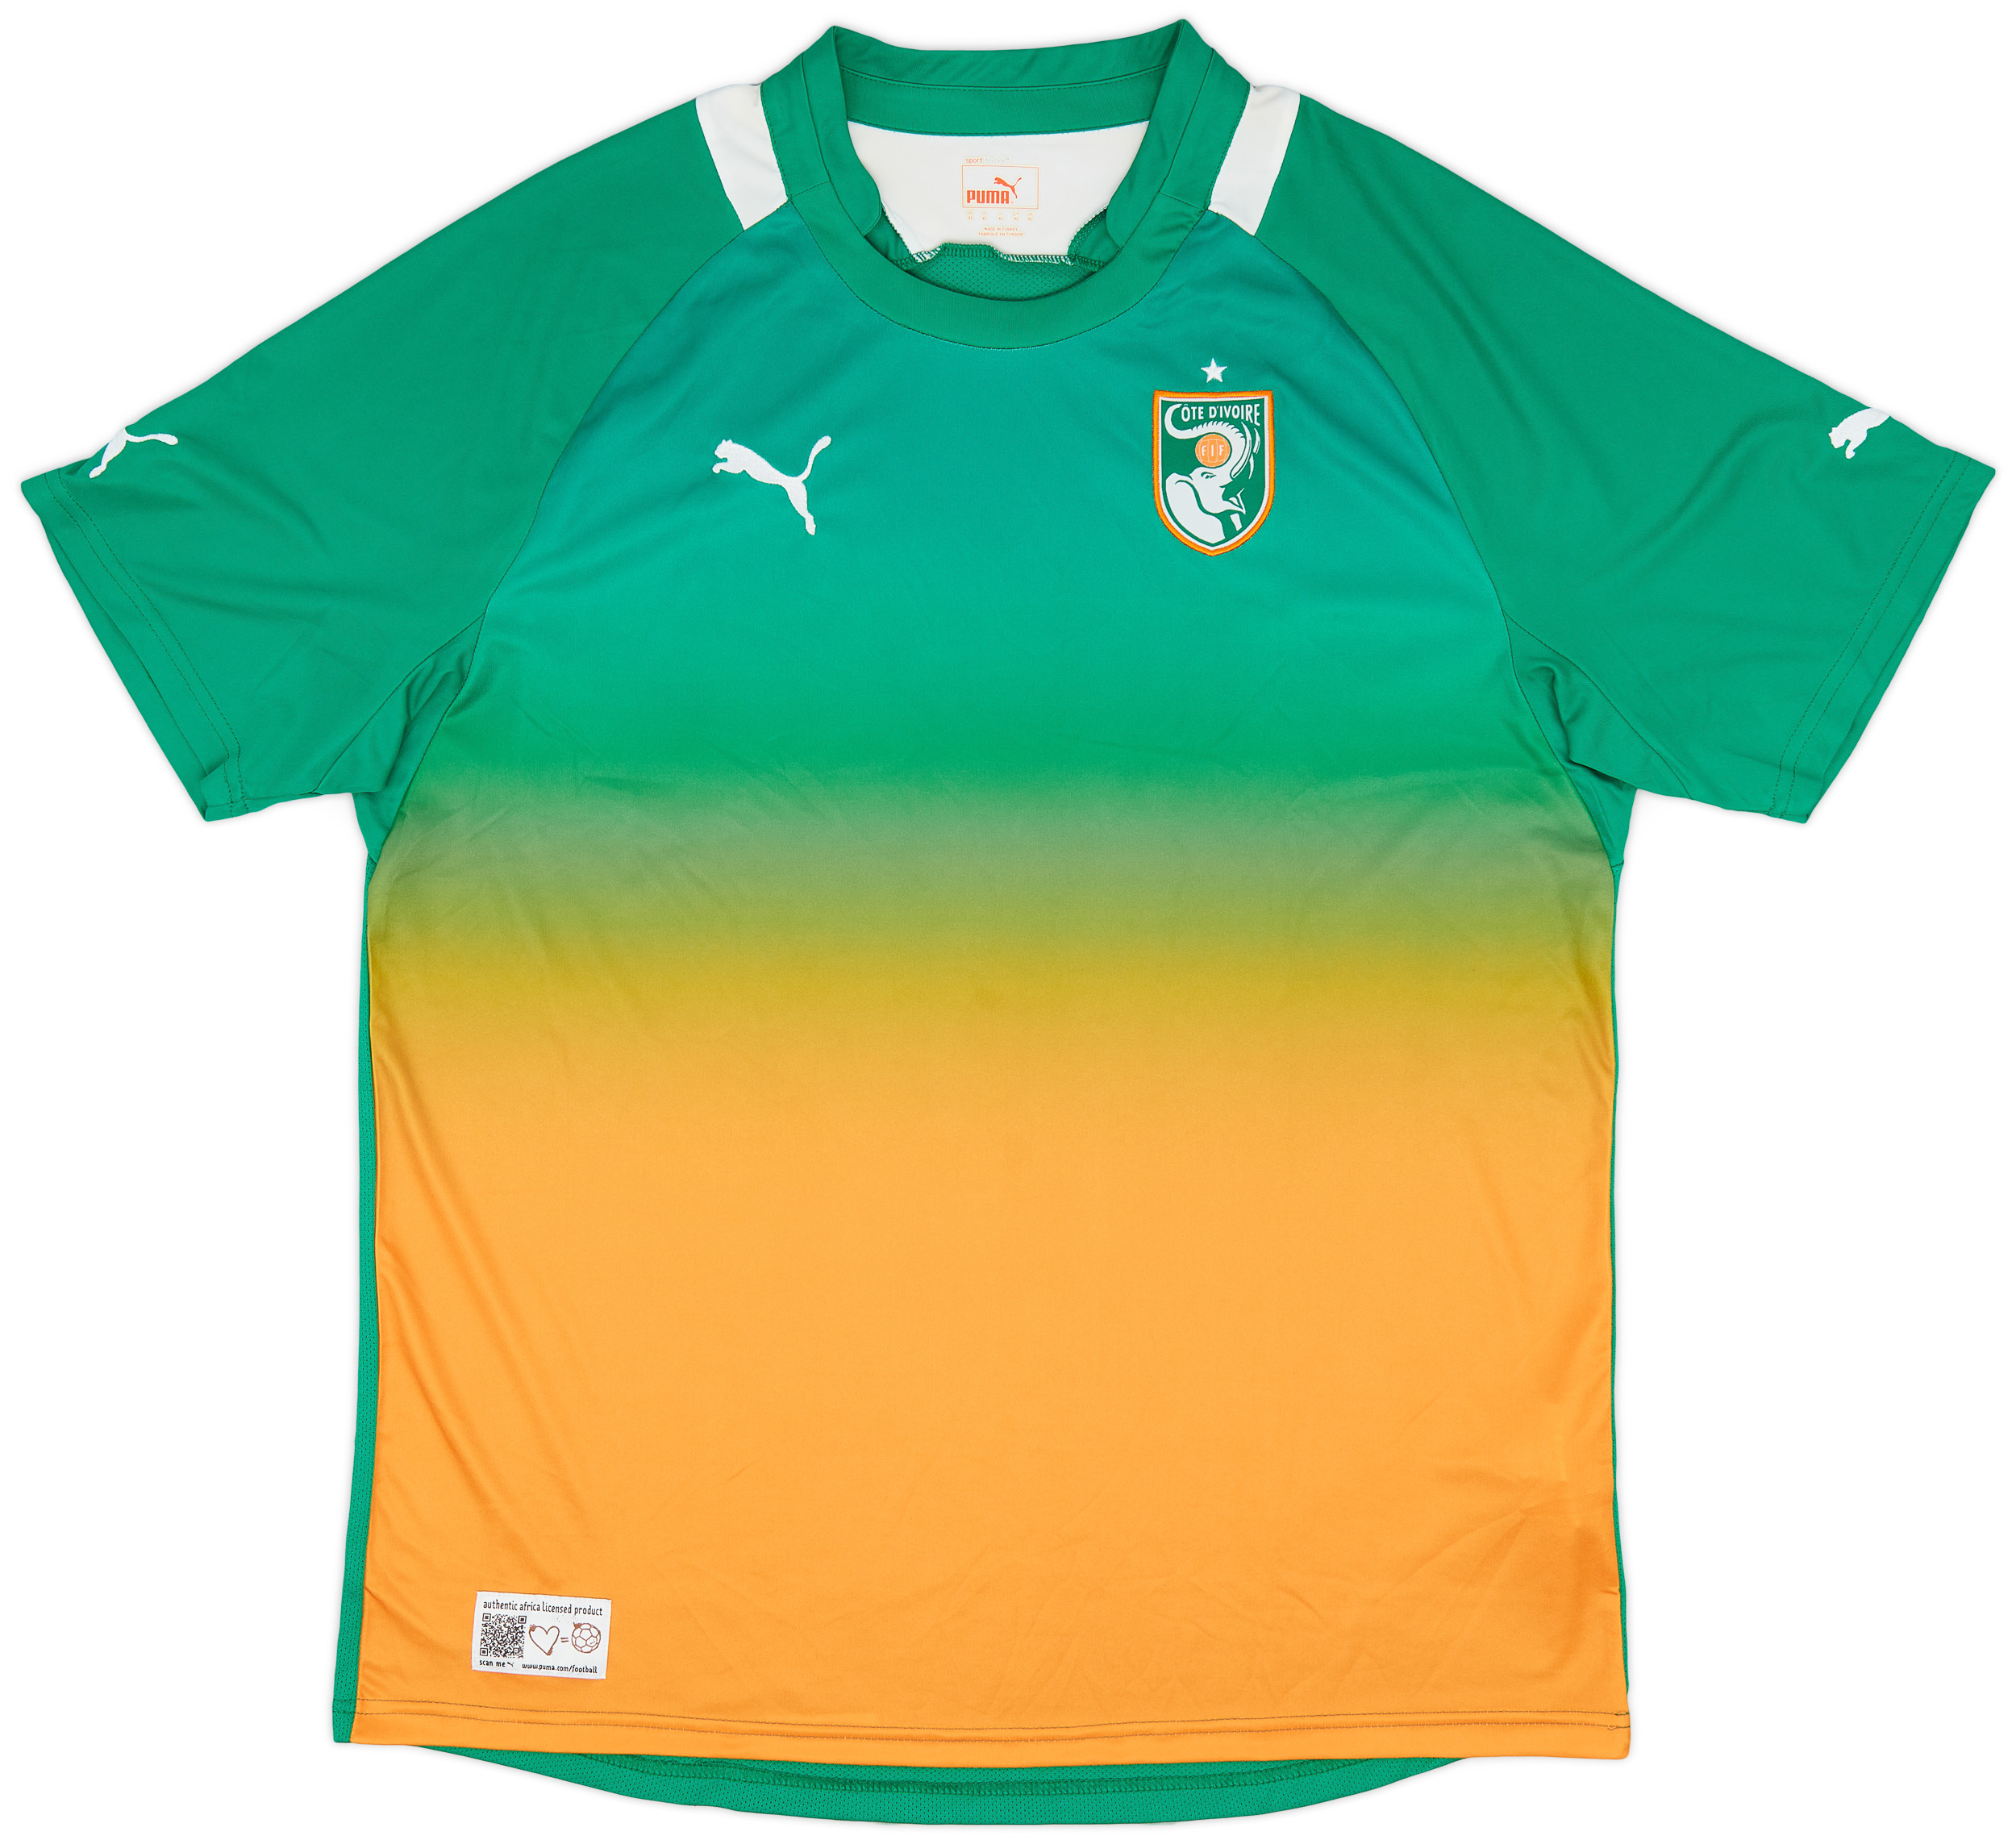 2012 Ivory Coast Away Shirt - 9/10 - ()